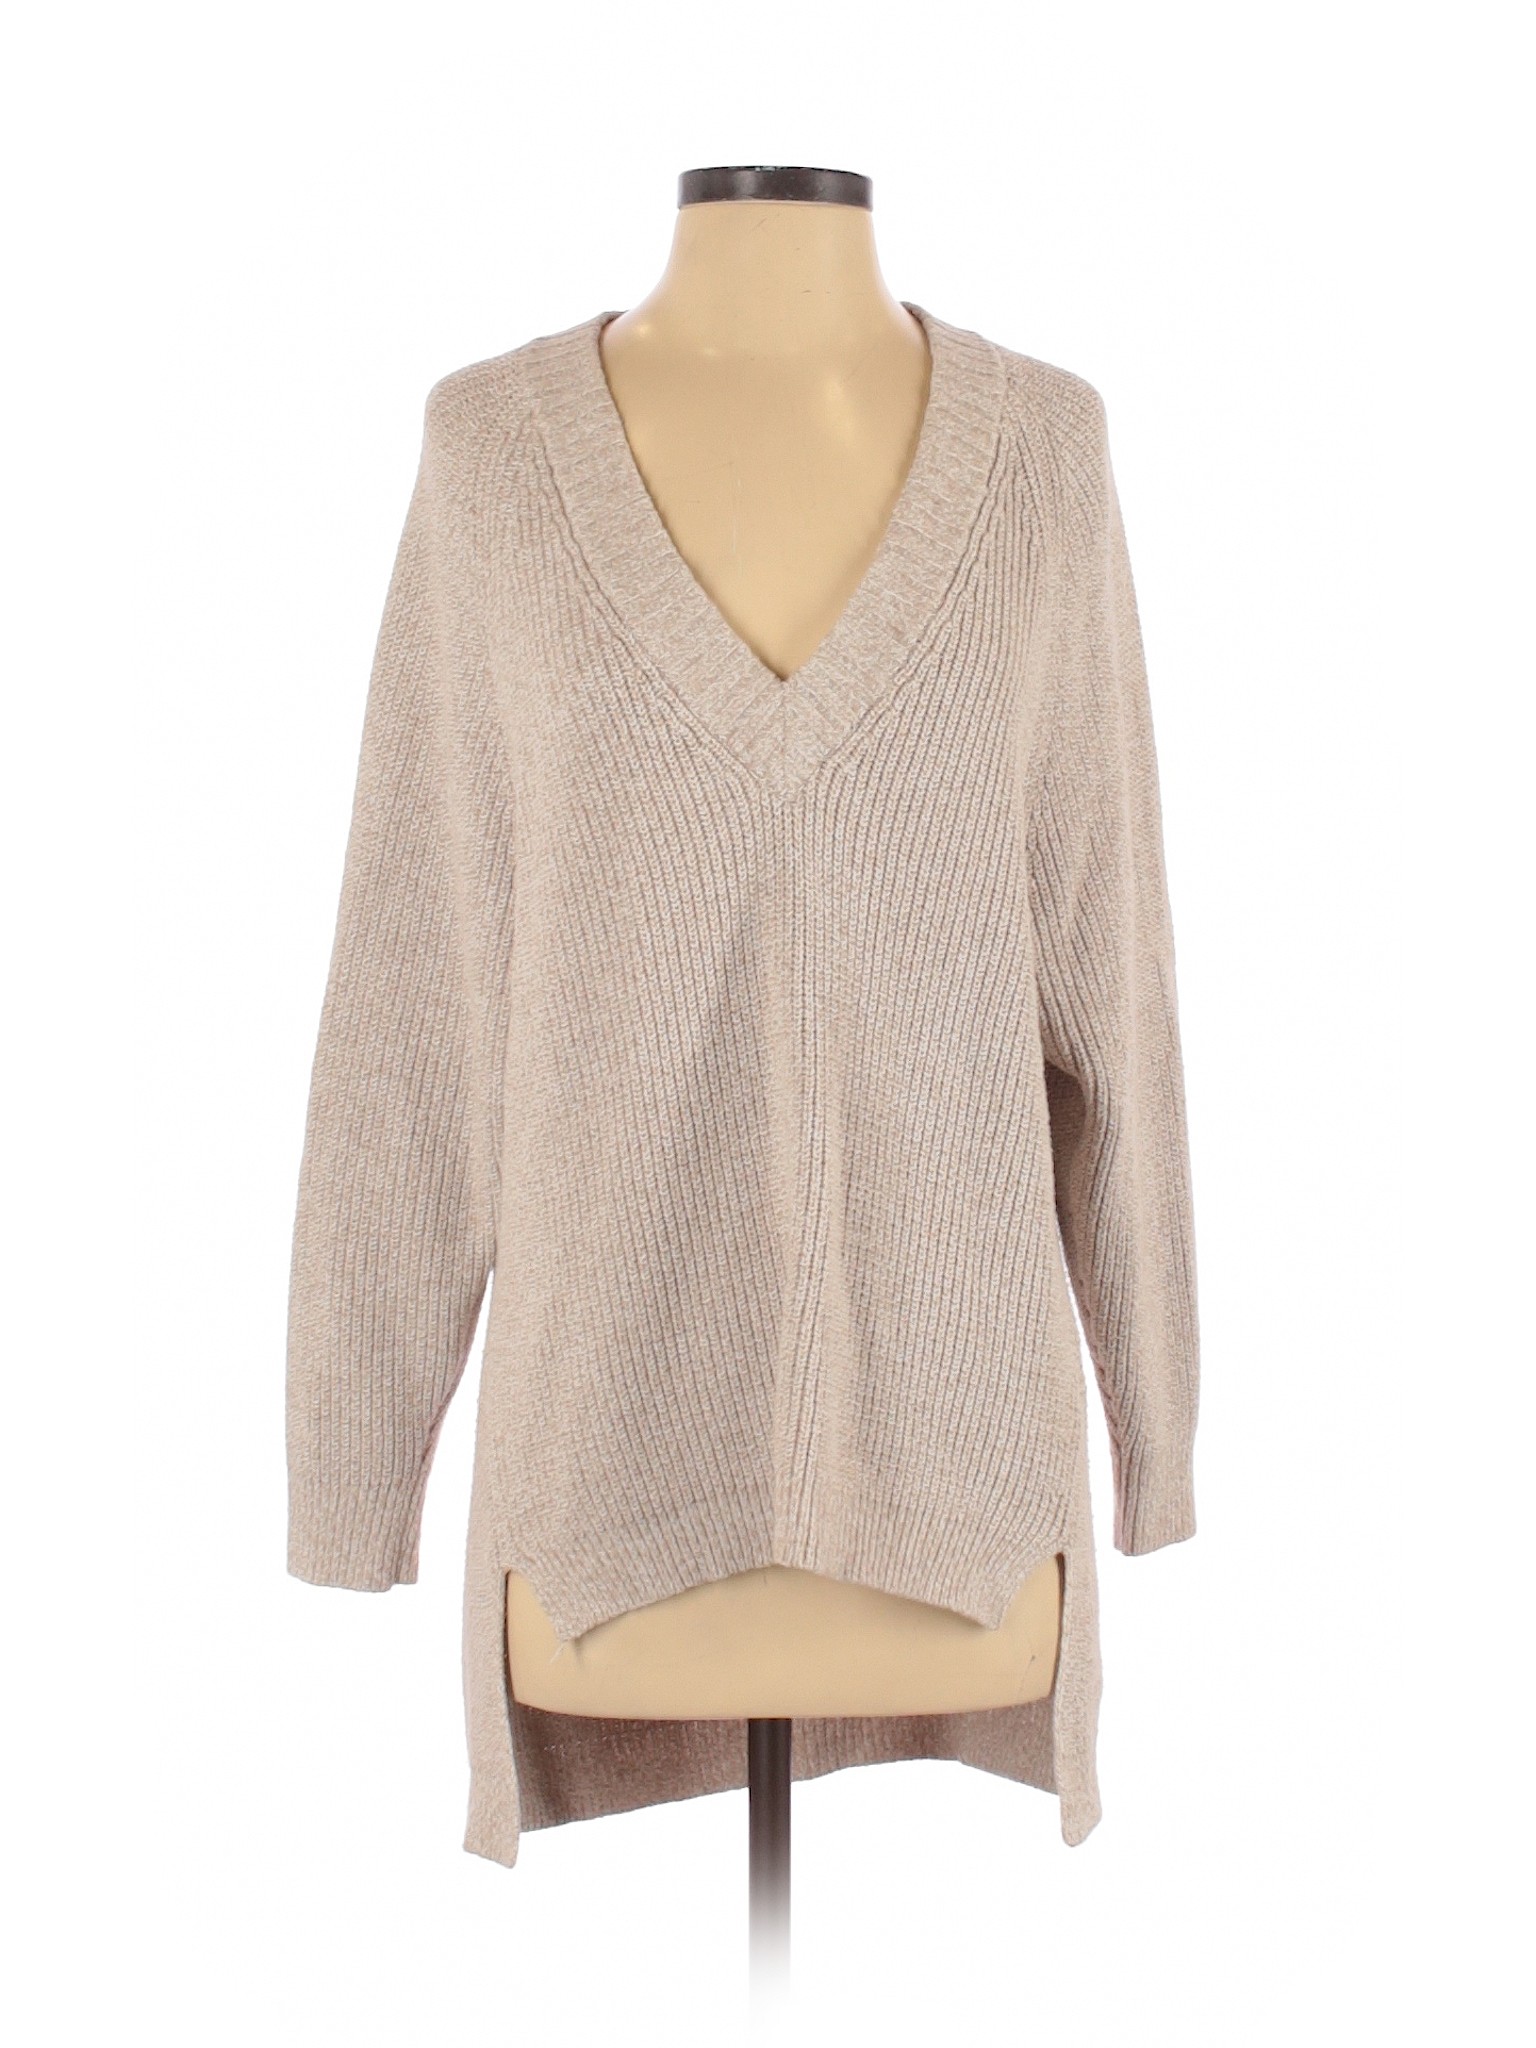 Express Women Brown Pullover Sweater S | eBay